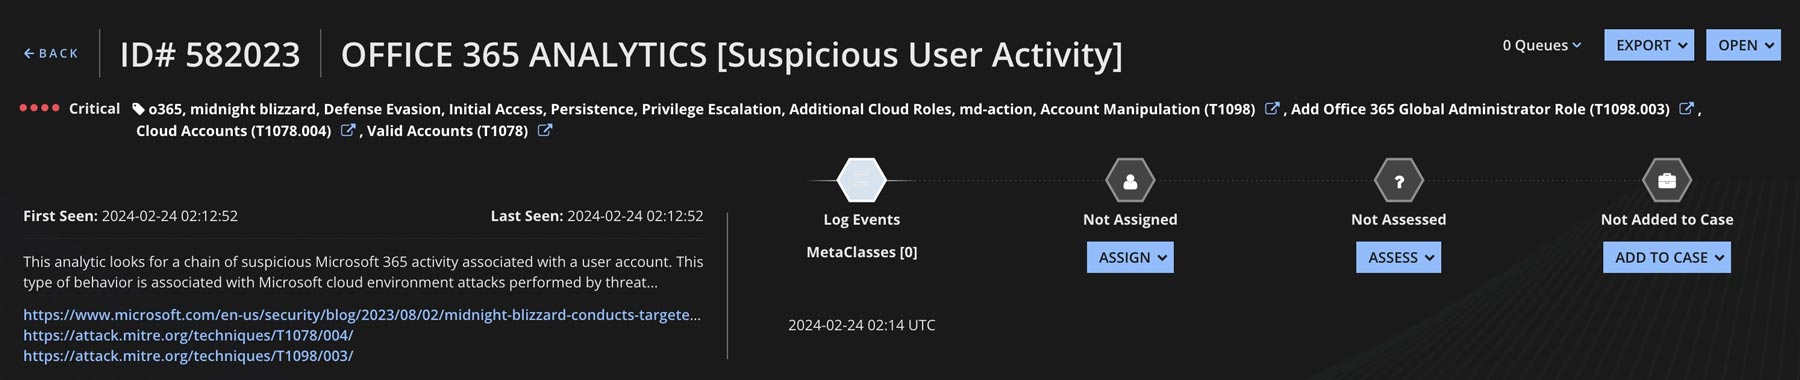 Figure 2: An “OFFICE 365 ANALYTICS  Suspicious User Activity” Helix alert